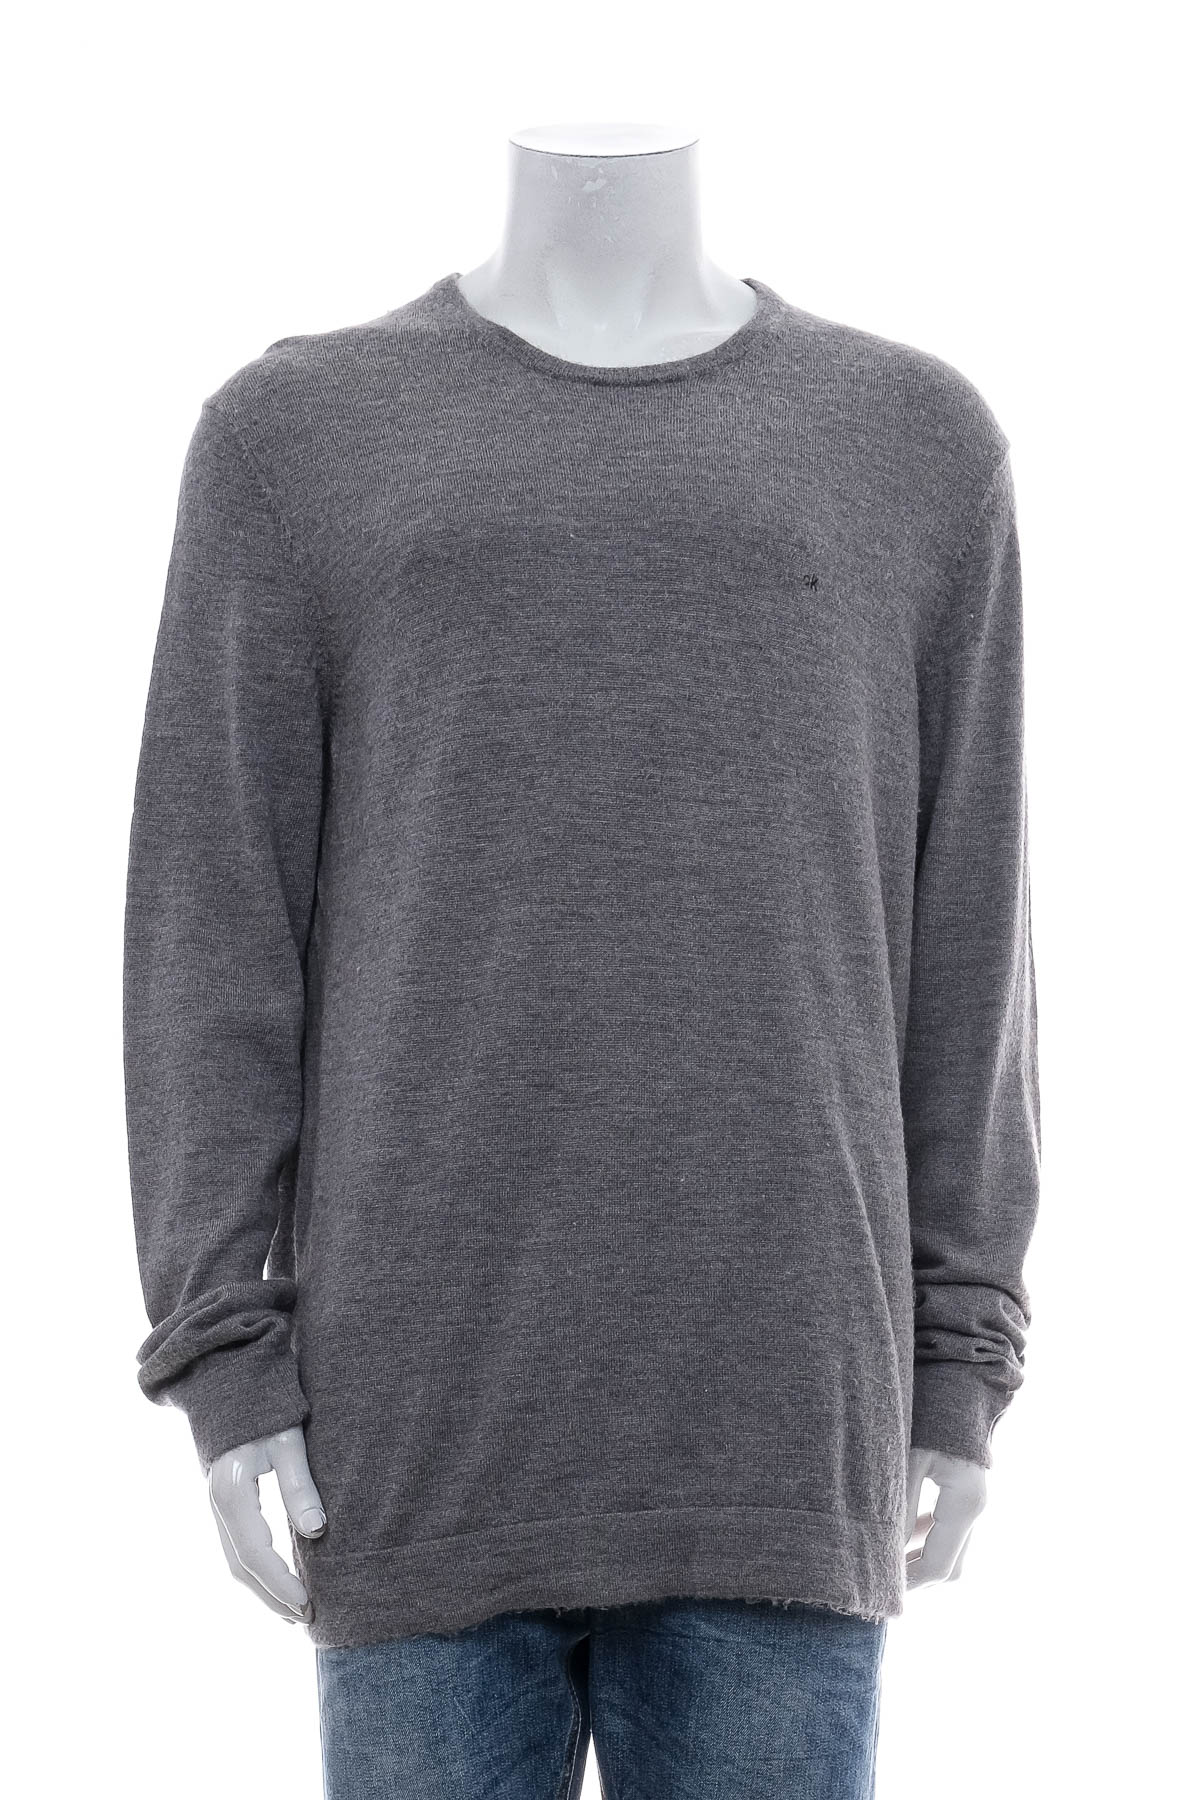 Men's sweater - Calvin Klein - 0